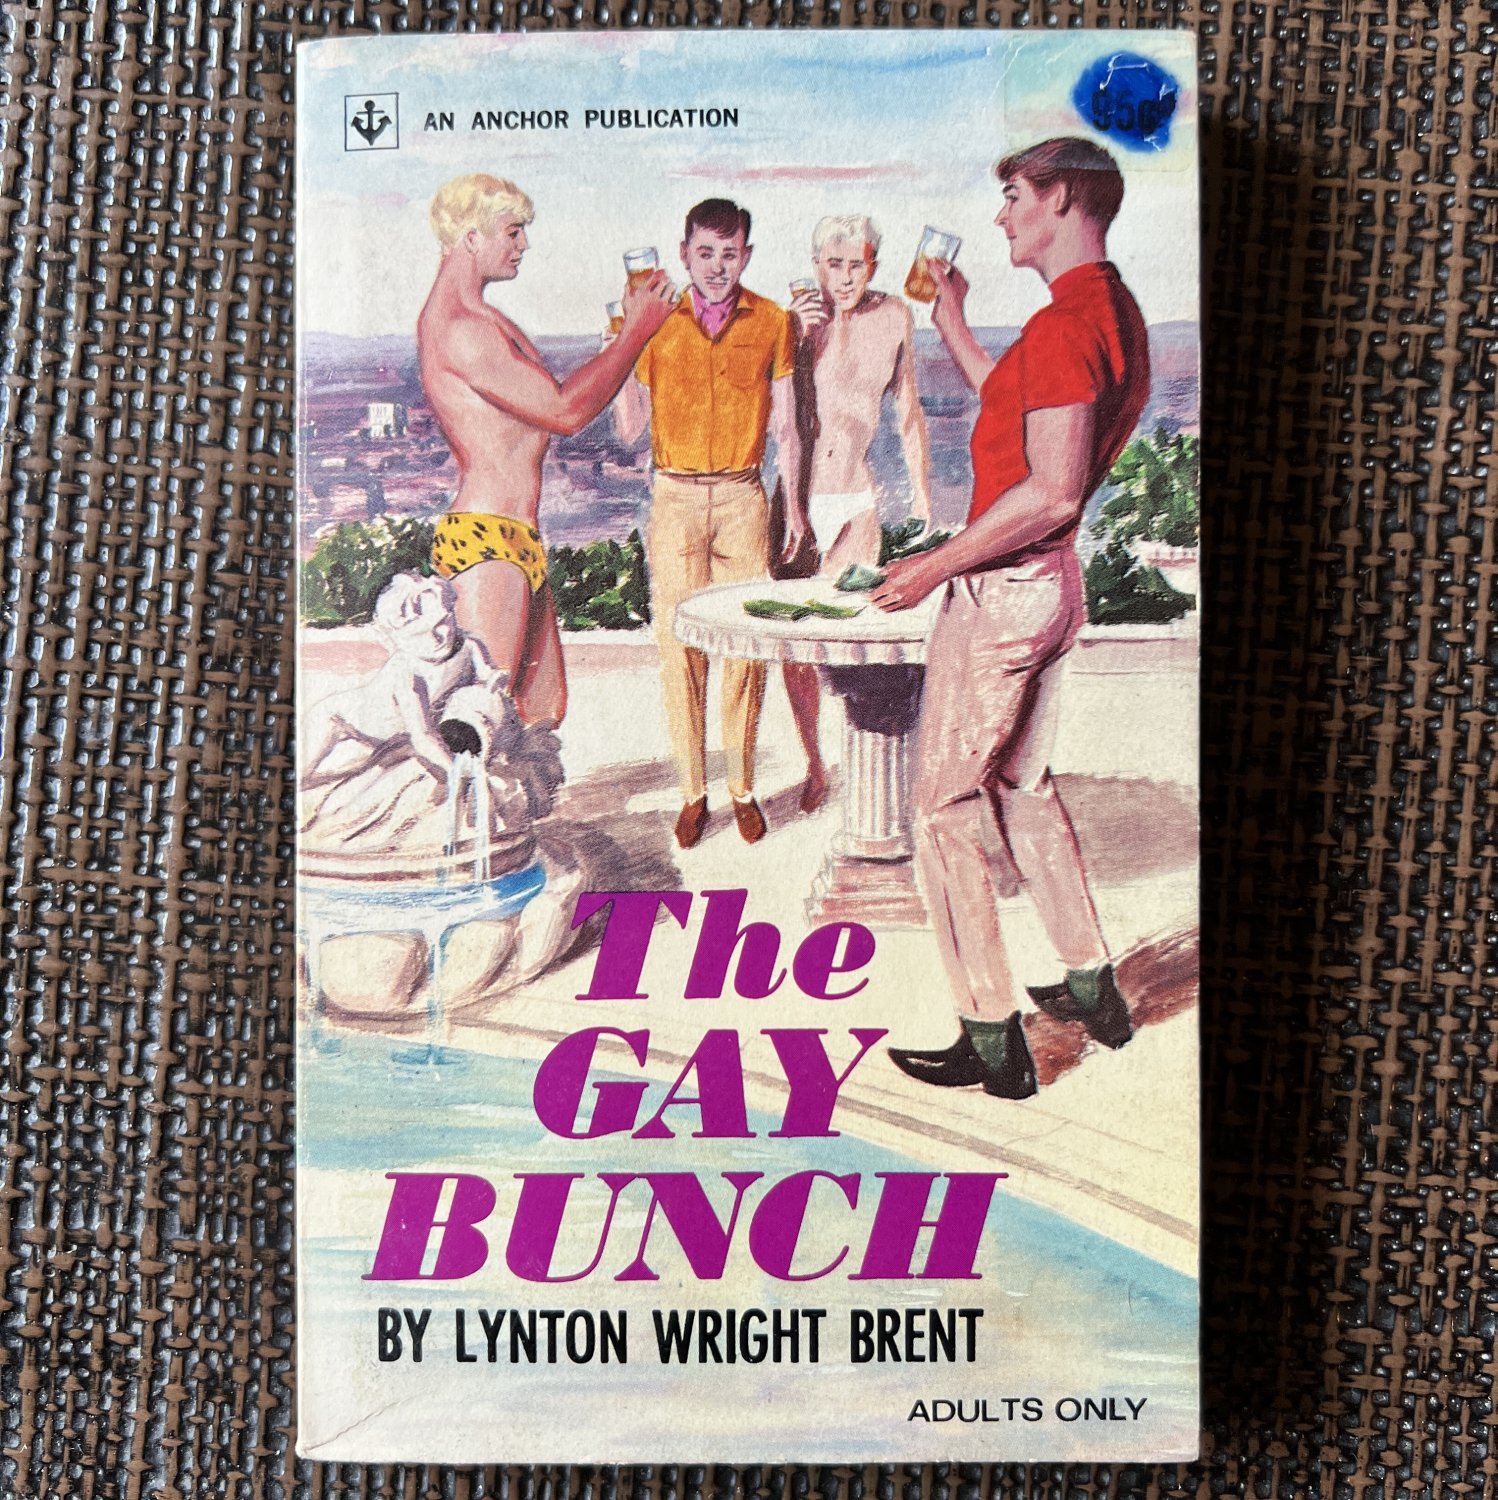 THE GAY BRUNCH (1965) Anchor Publication LYNTON WRIGHT BRENT Novel PB HOMOSEXUAL Gay Pulp ART Teen